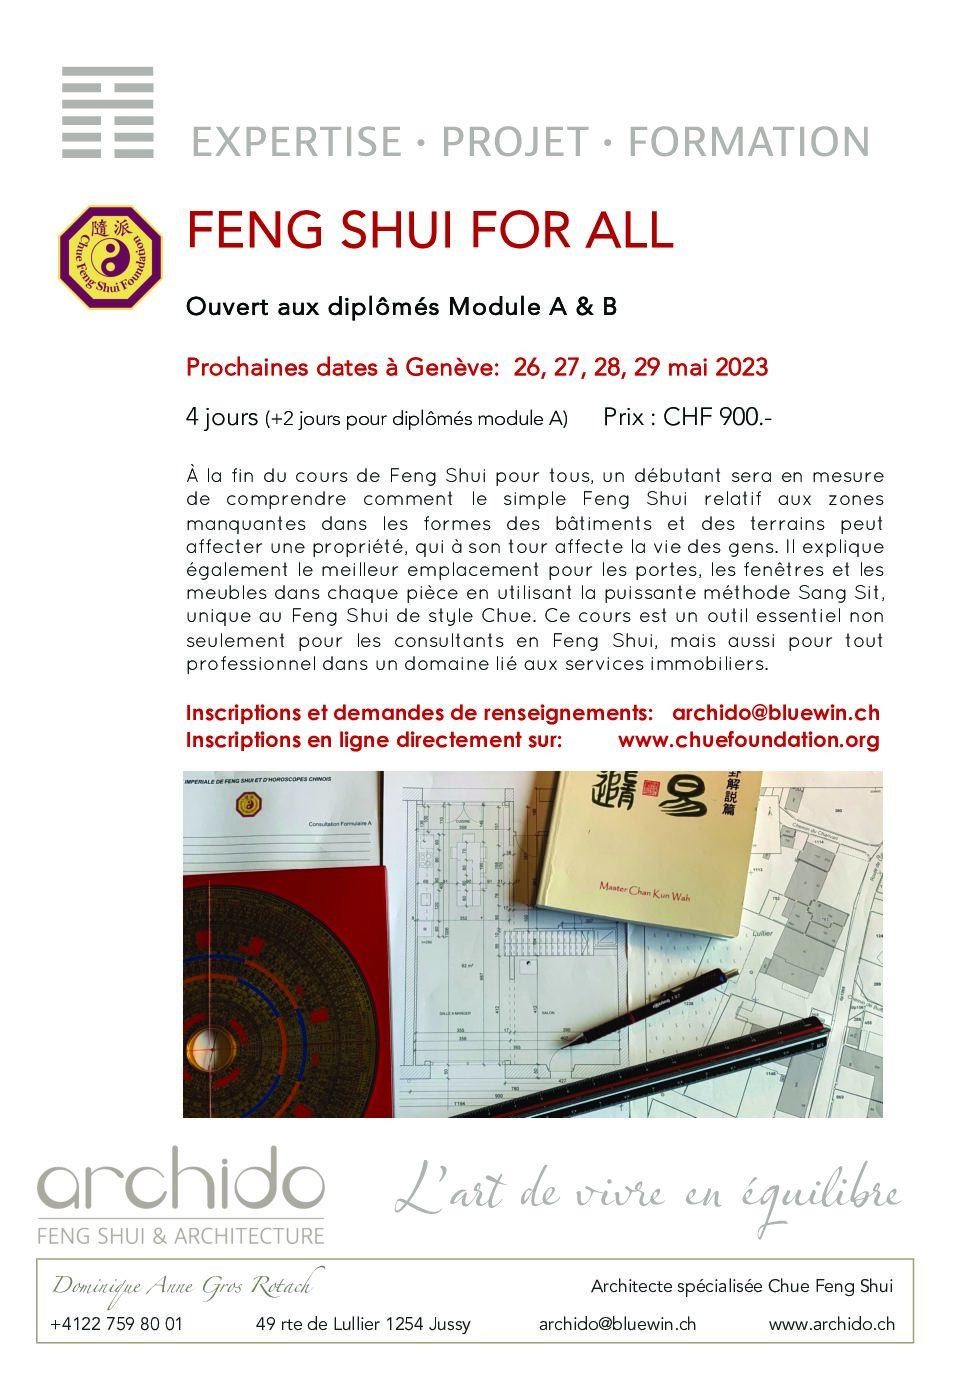 Feng Shui Pour tous (Feng Shui for All - for undergraduates)